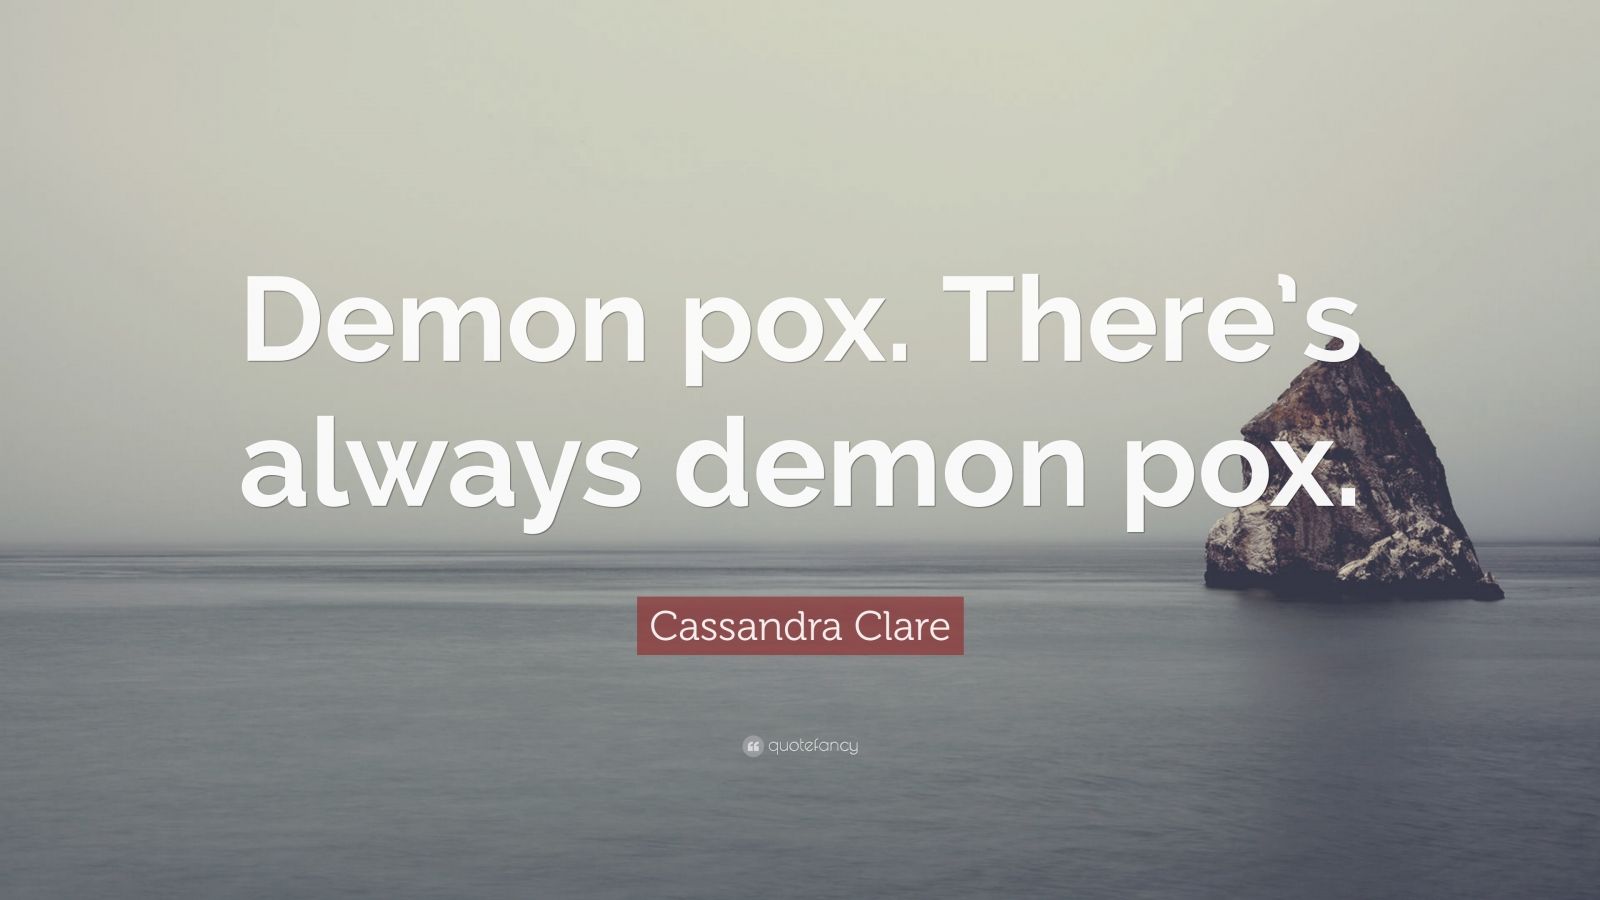 Cassandra Clare Quote: “Demon pox. There’s always demon pox.”